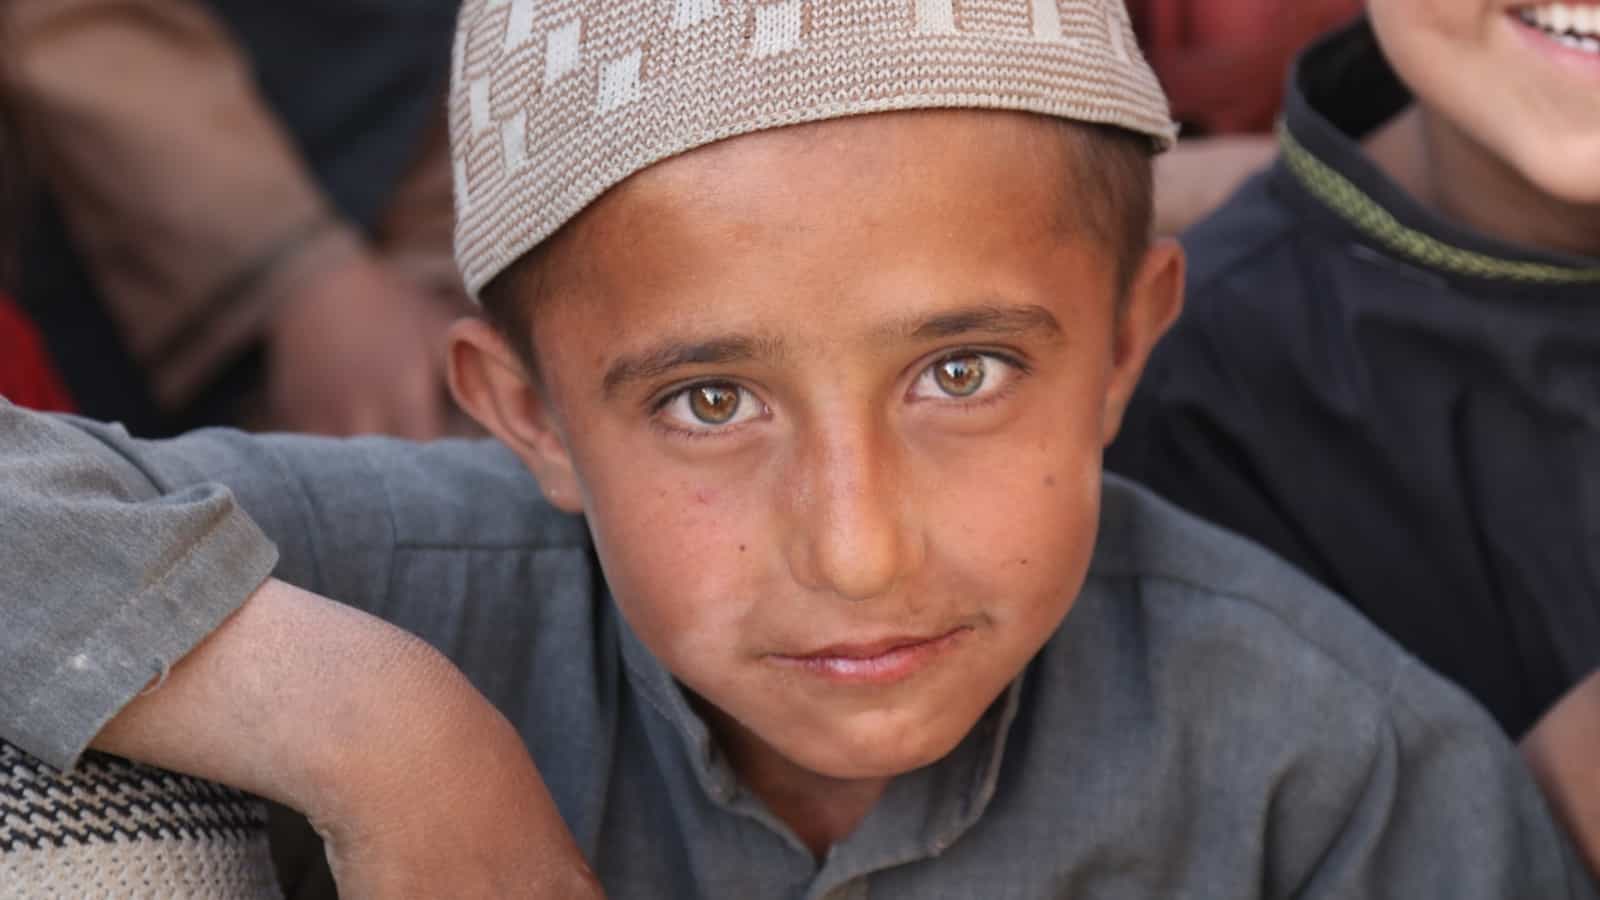 An Afghan child. Photo by Waheedullah Jahesh via Shutterstock.com